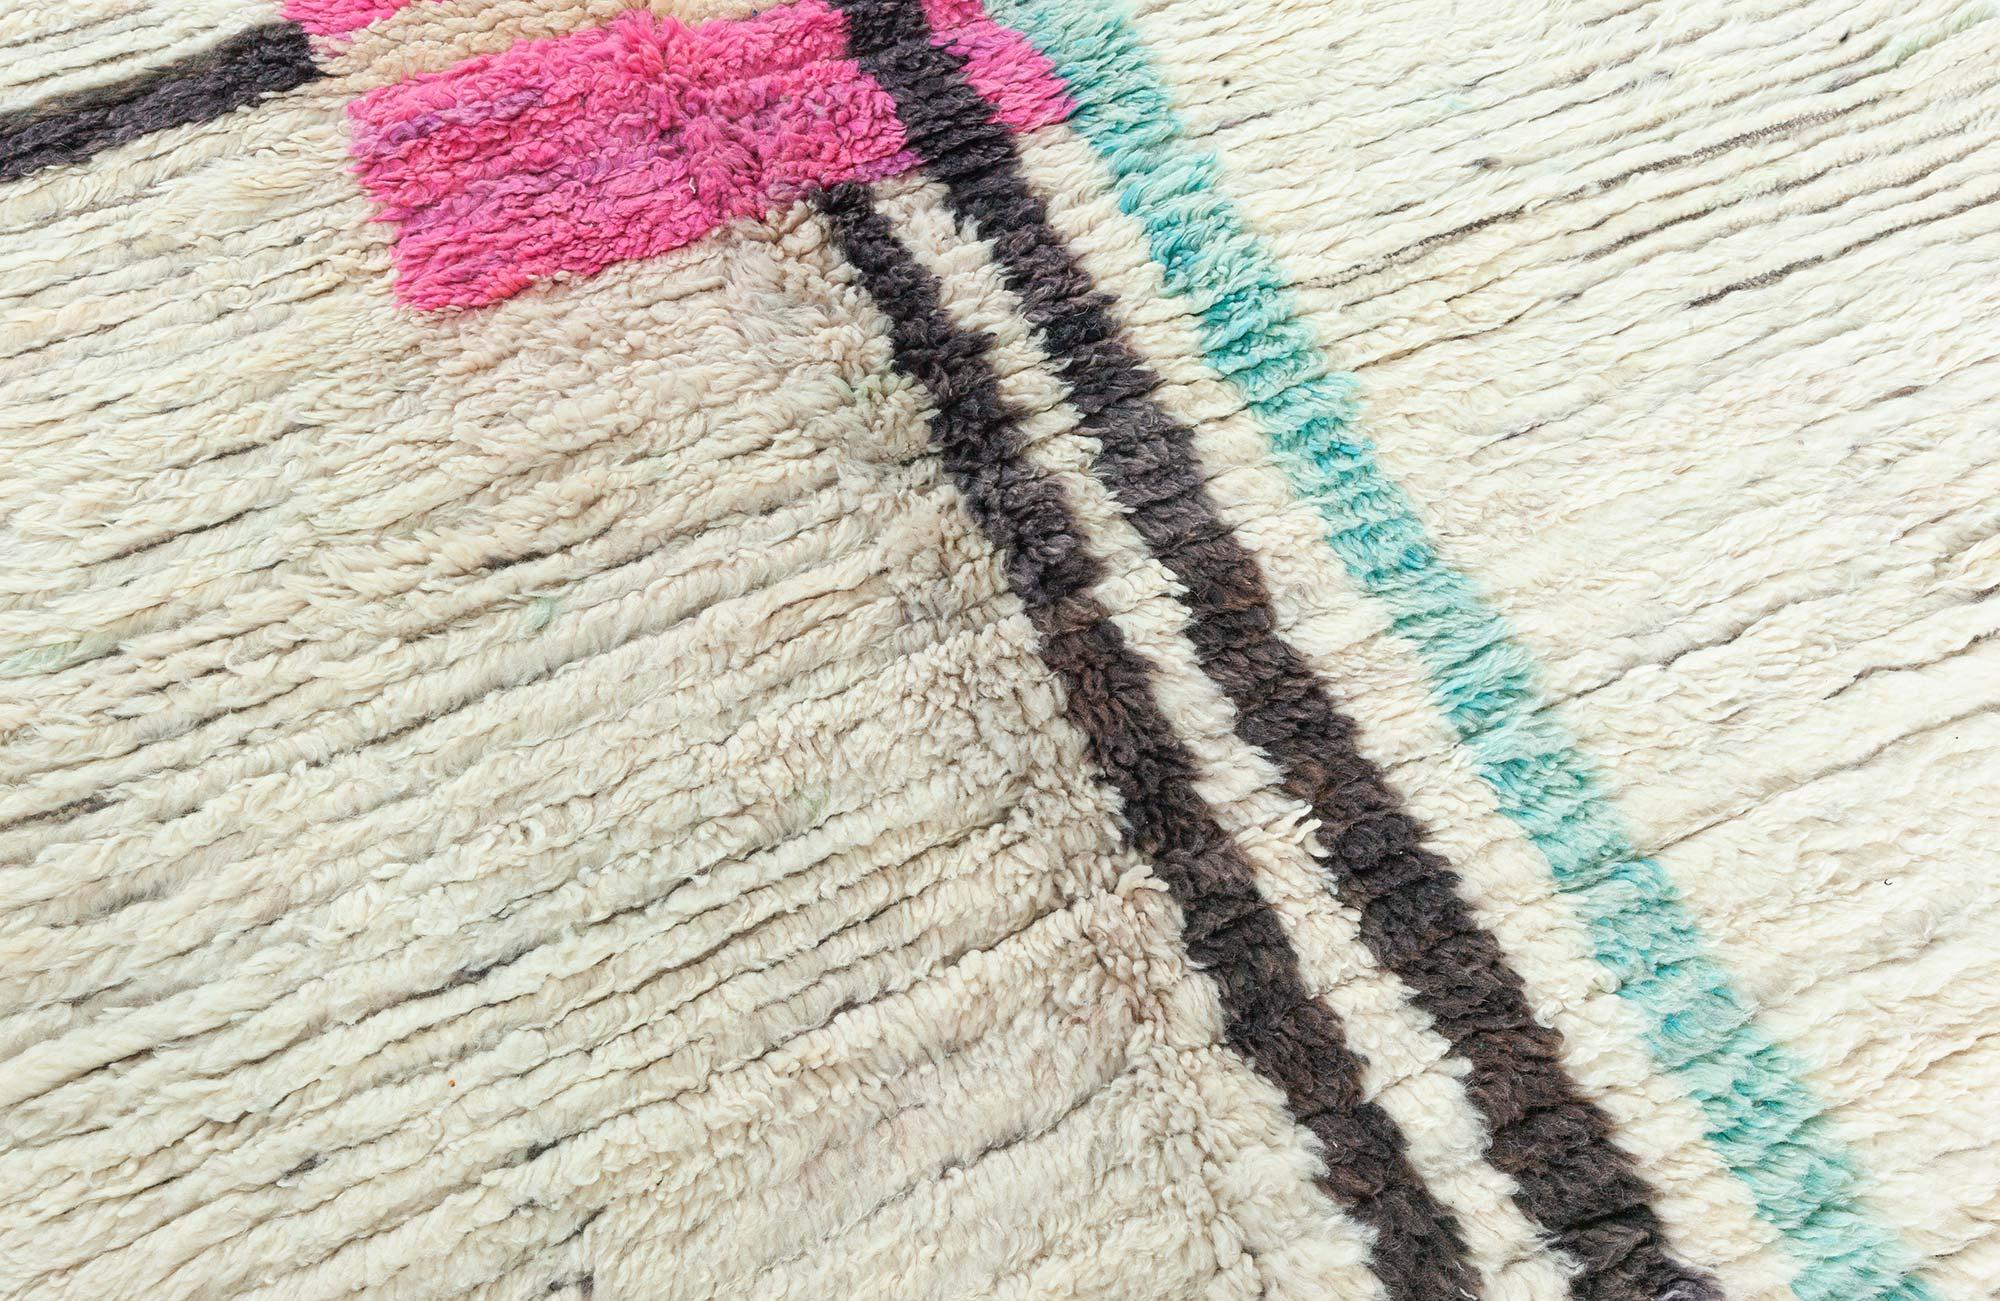 Modern Moroccan abstract handmade wool rug by Doris Leslie Blau.
Size: 5'5